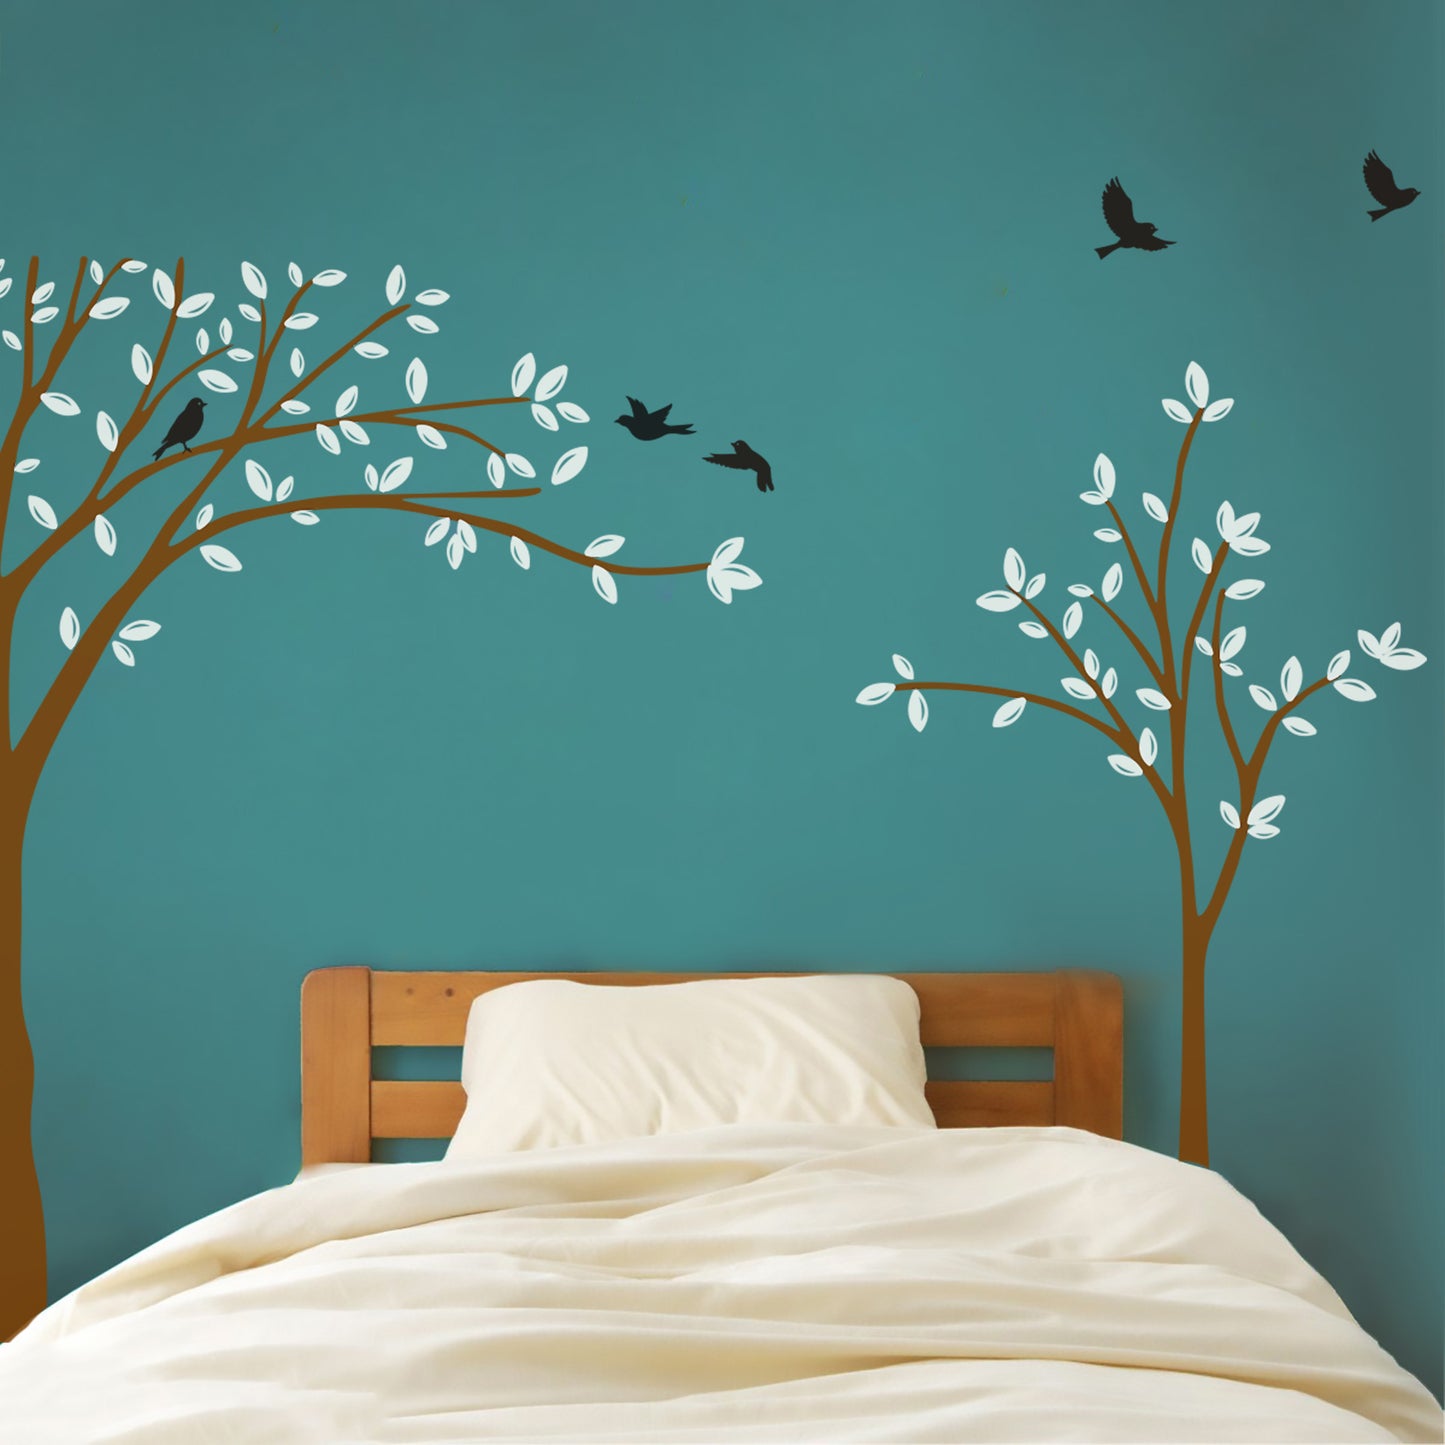 Little Gem Tree Wall Sticker with Birds